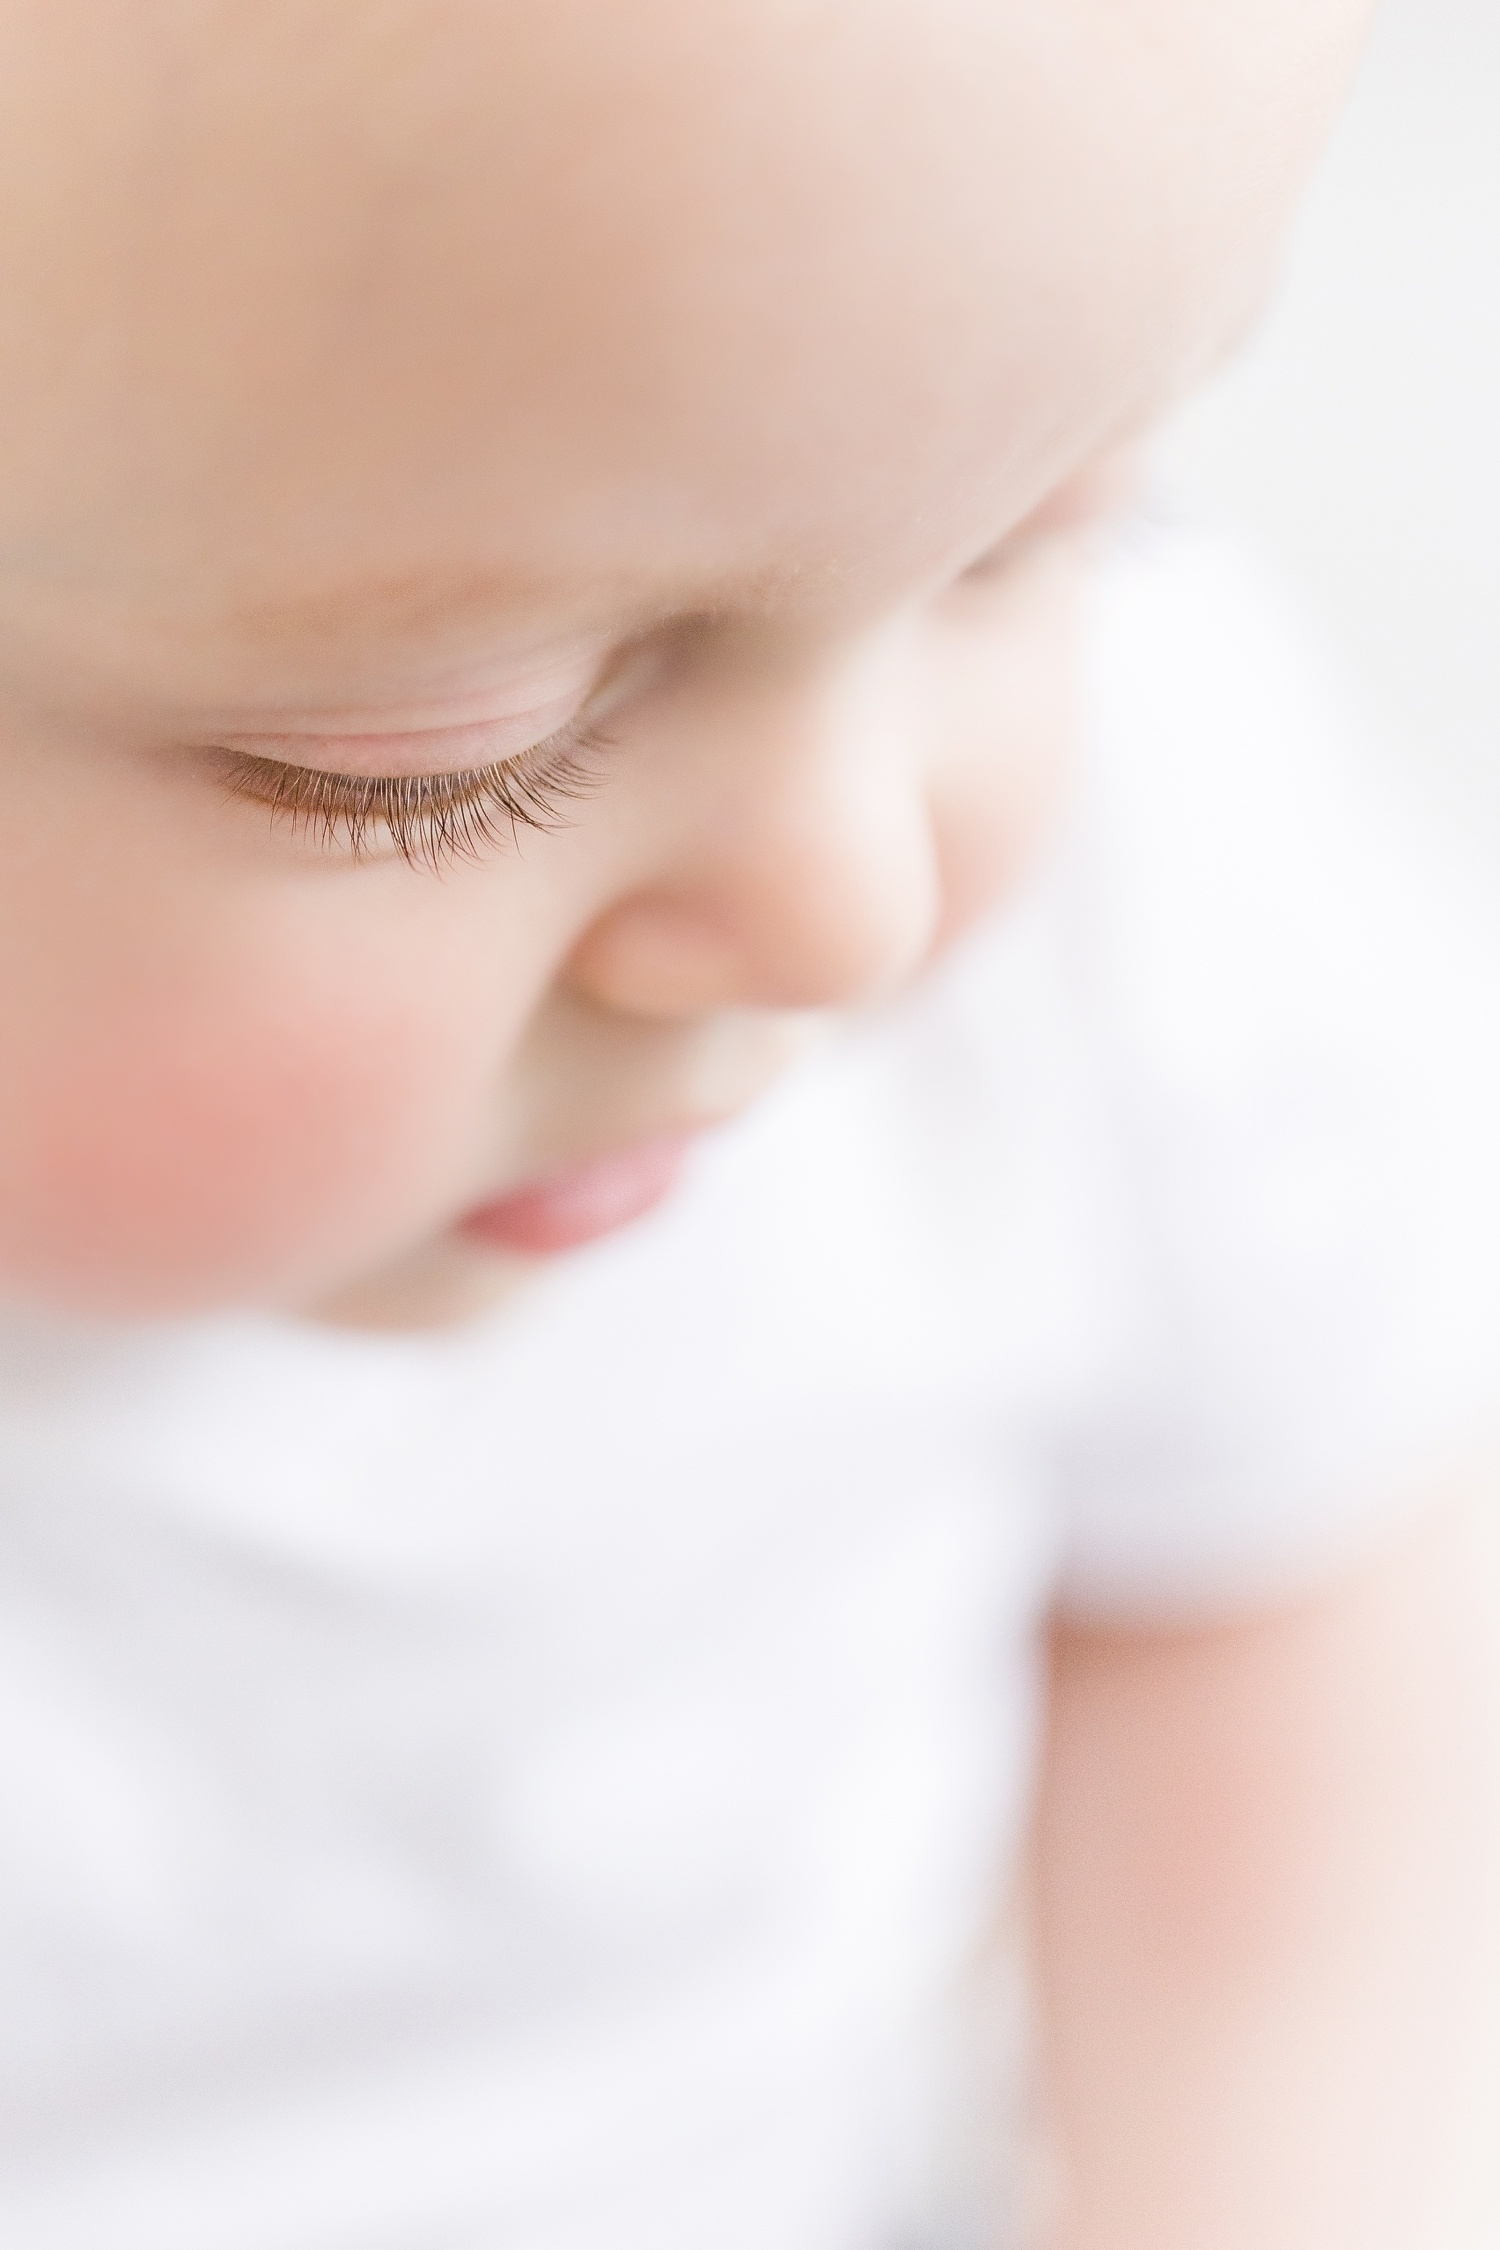 Closeup details of baby Emmett's beautiful, long eyelashes | CB Studio